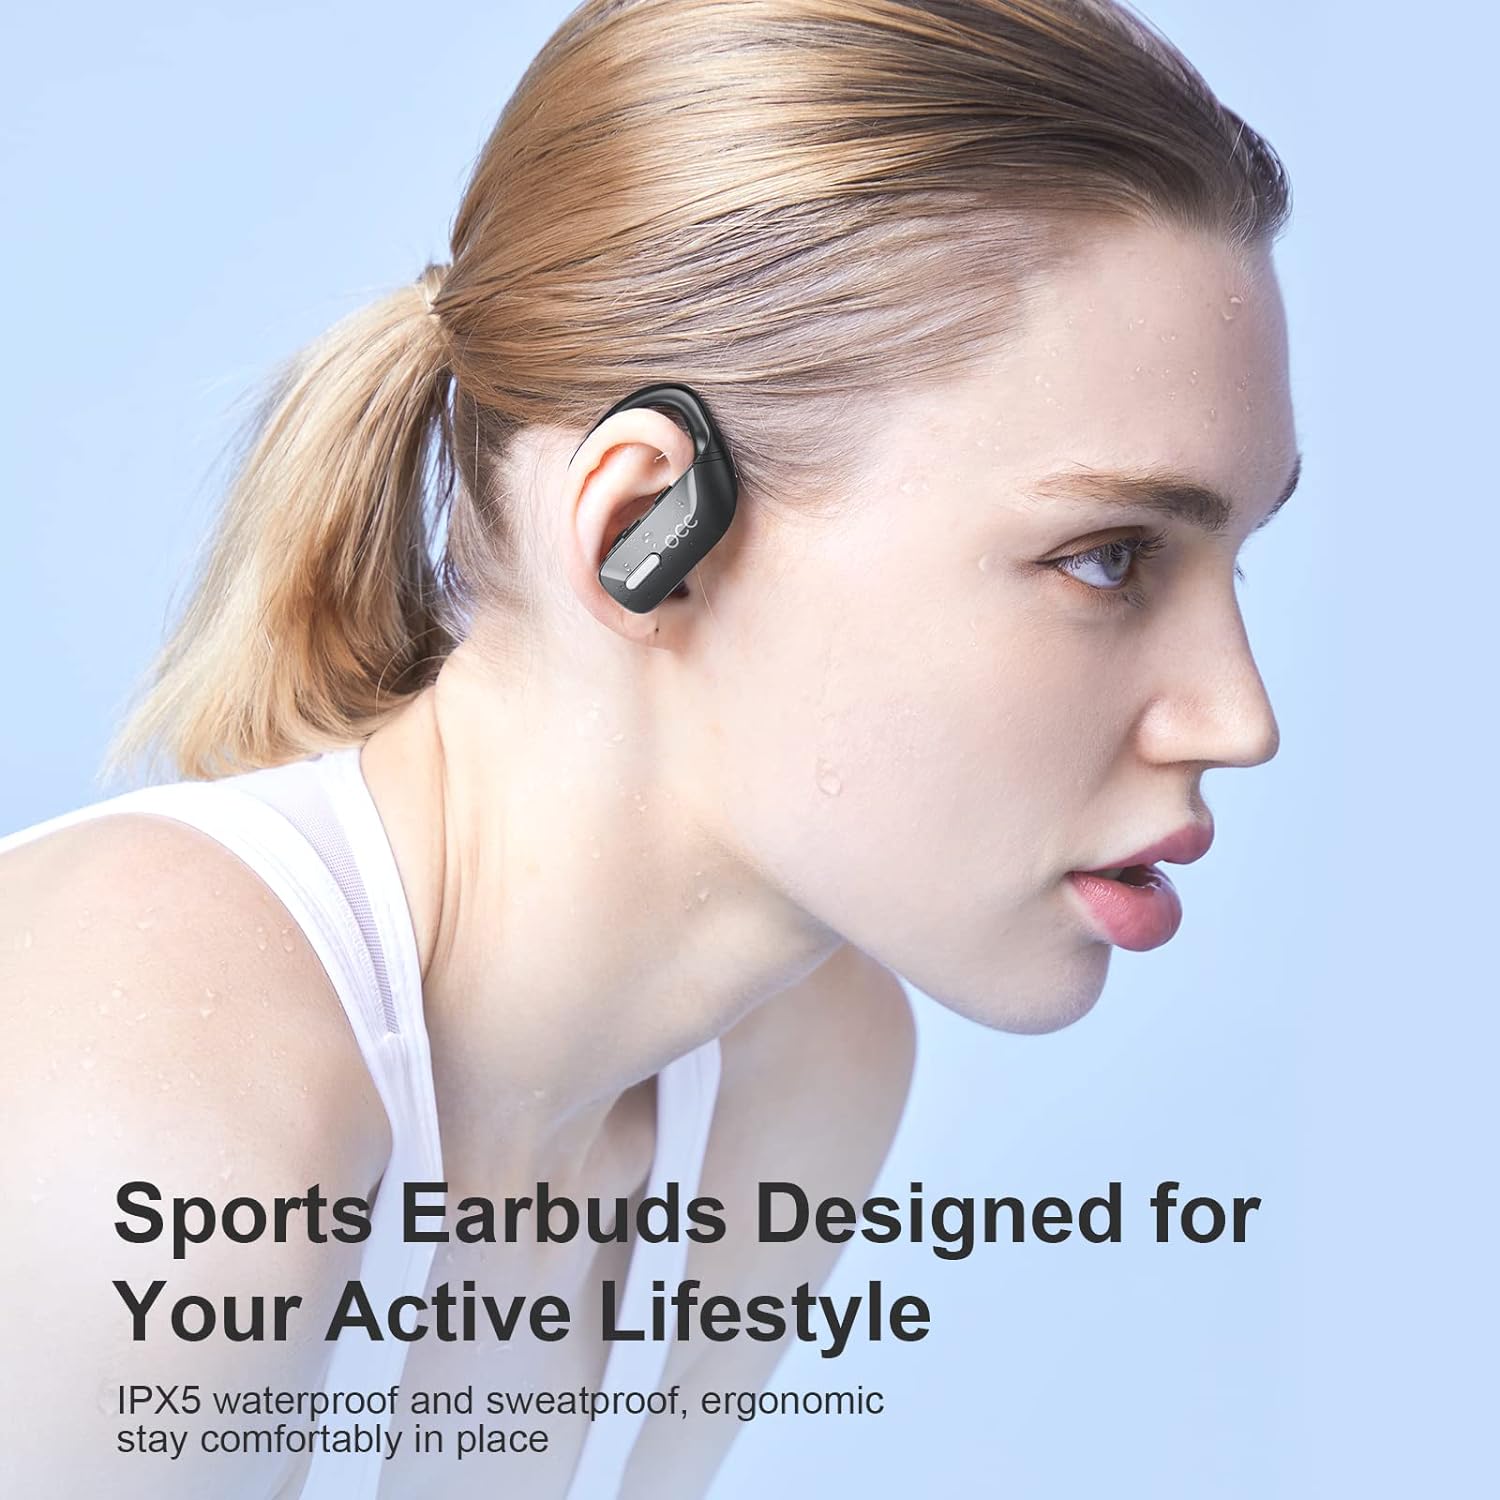 5 best headphones for fitness